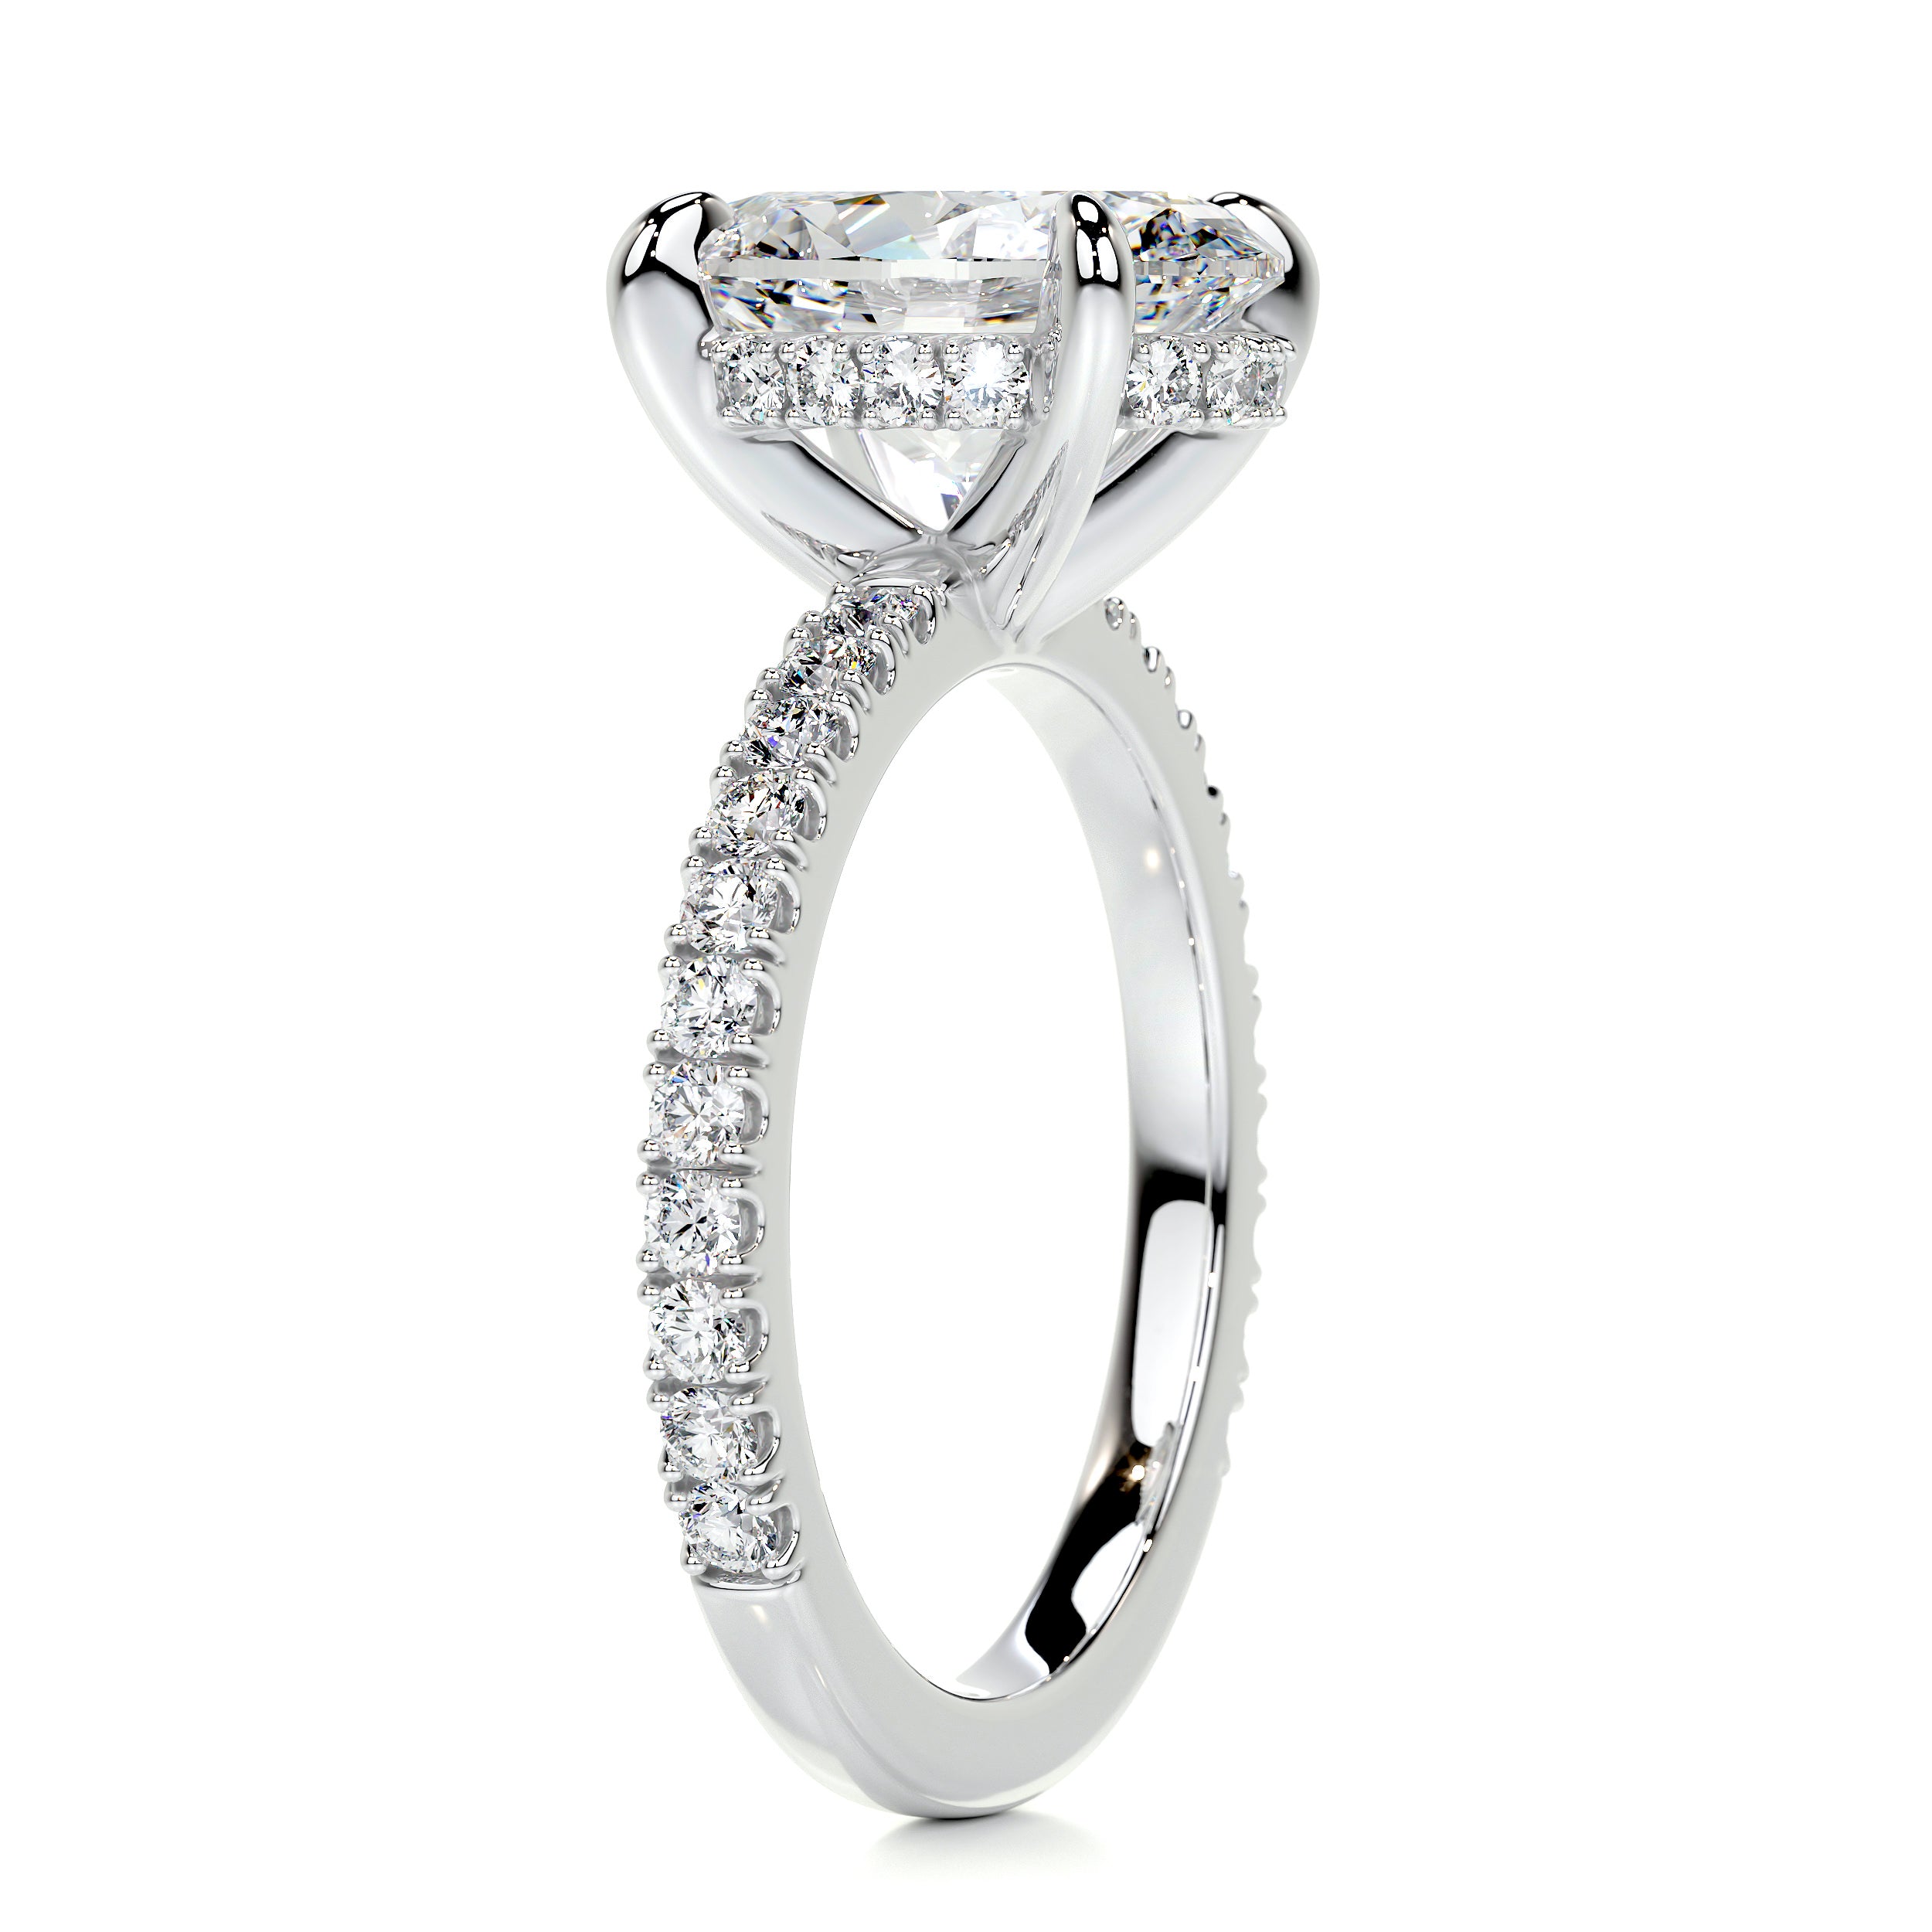 Lucy Diamond Engagement Ring   (2.5 Carat) -Platinum